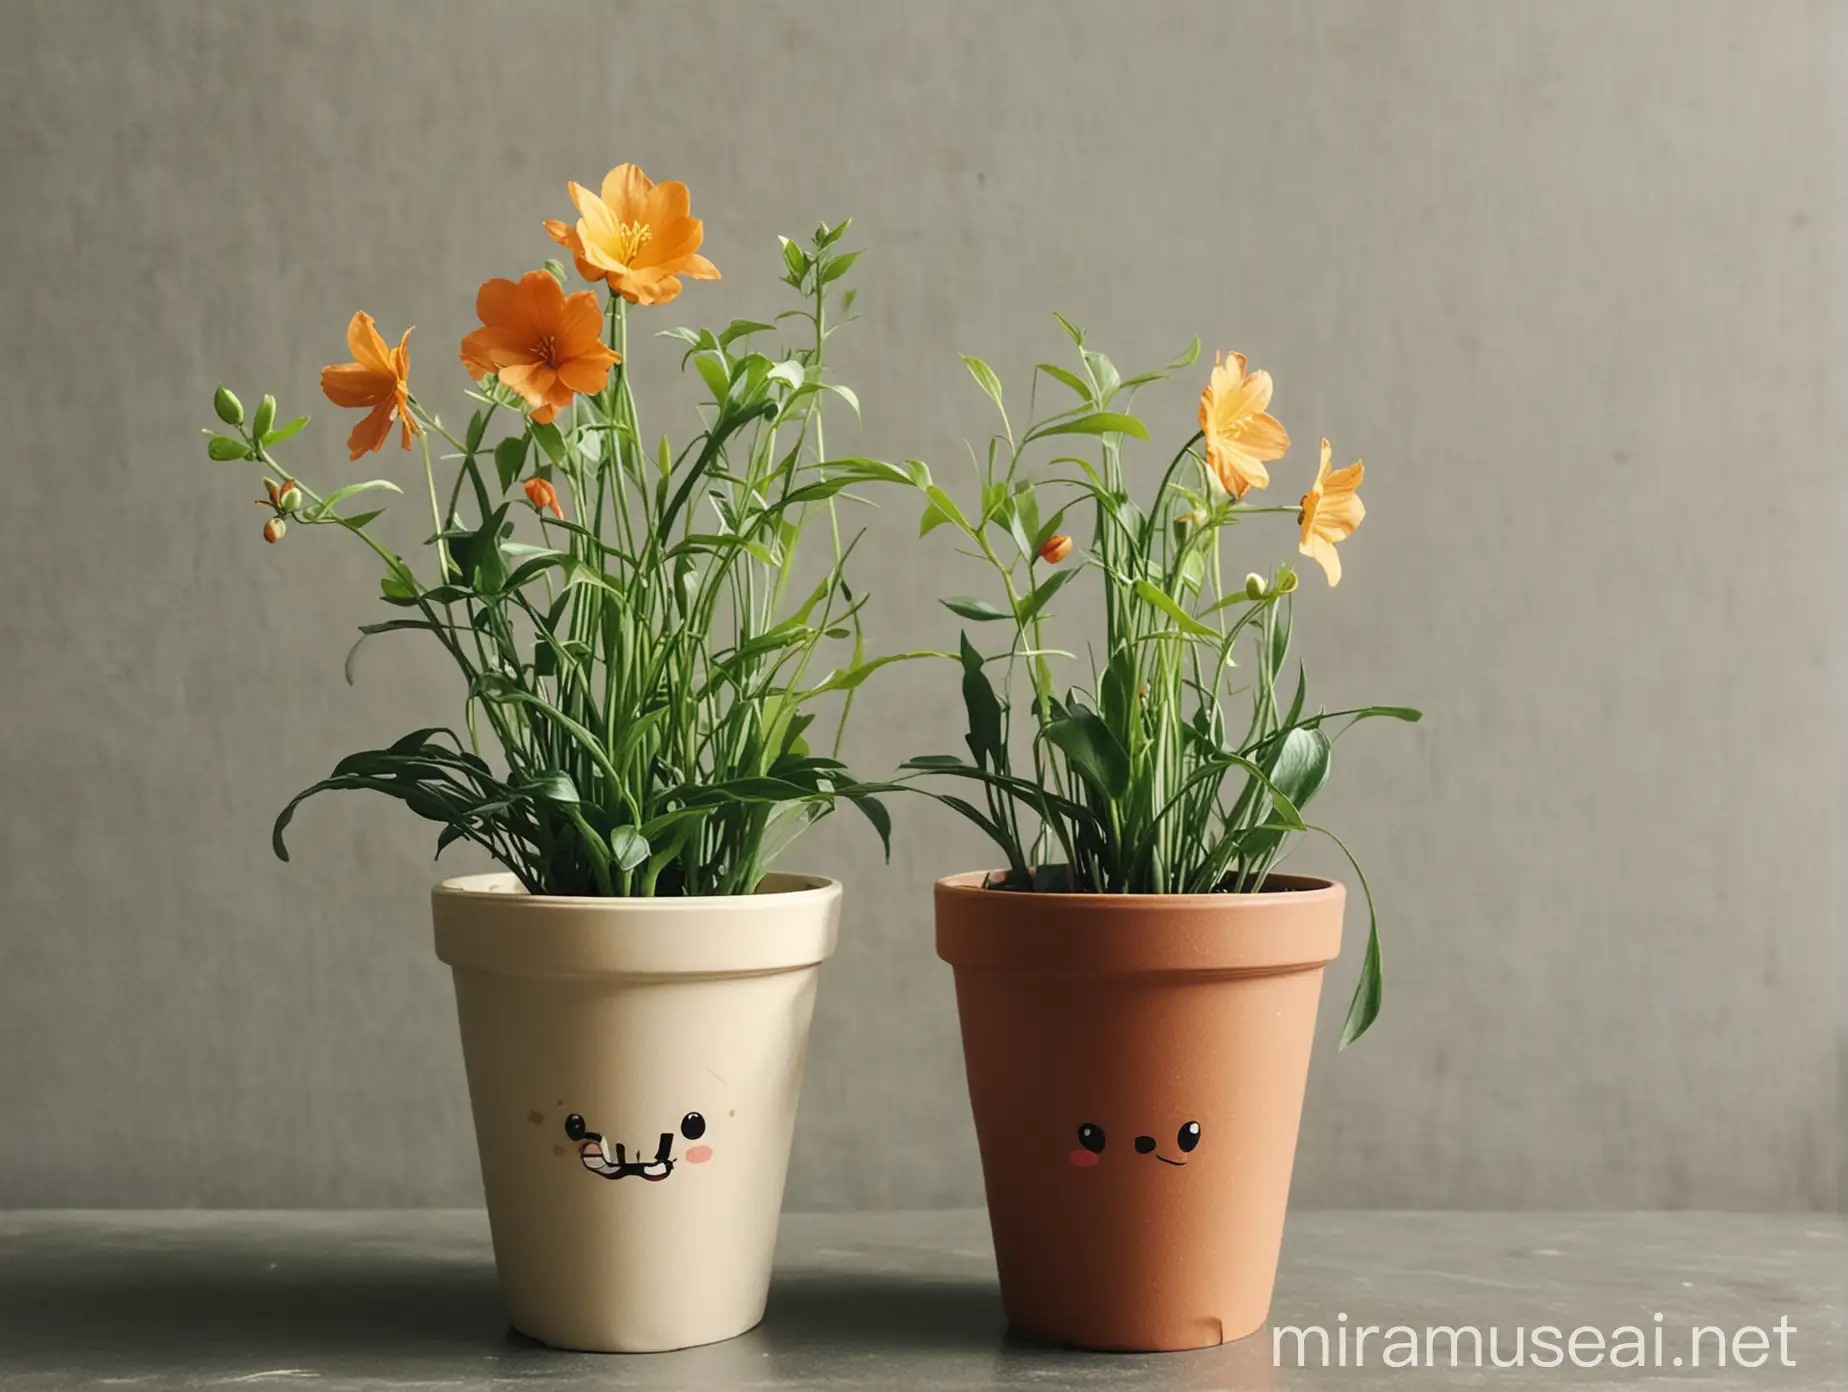 Flowering Plants in Friendship